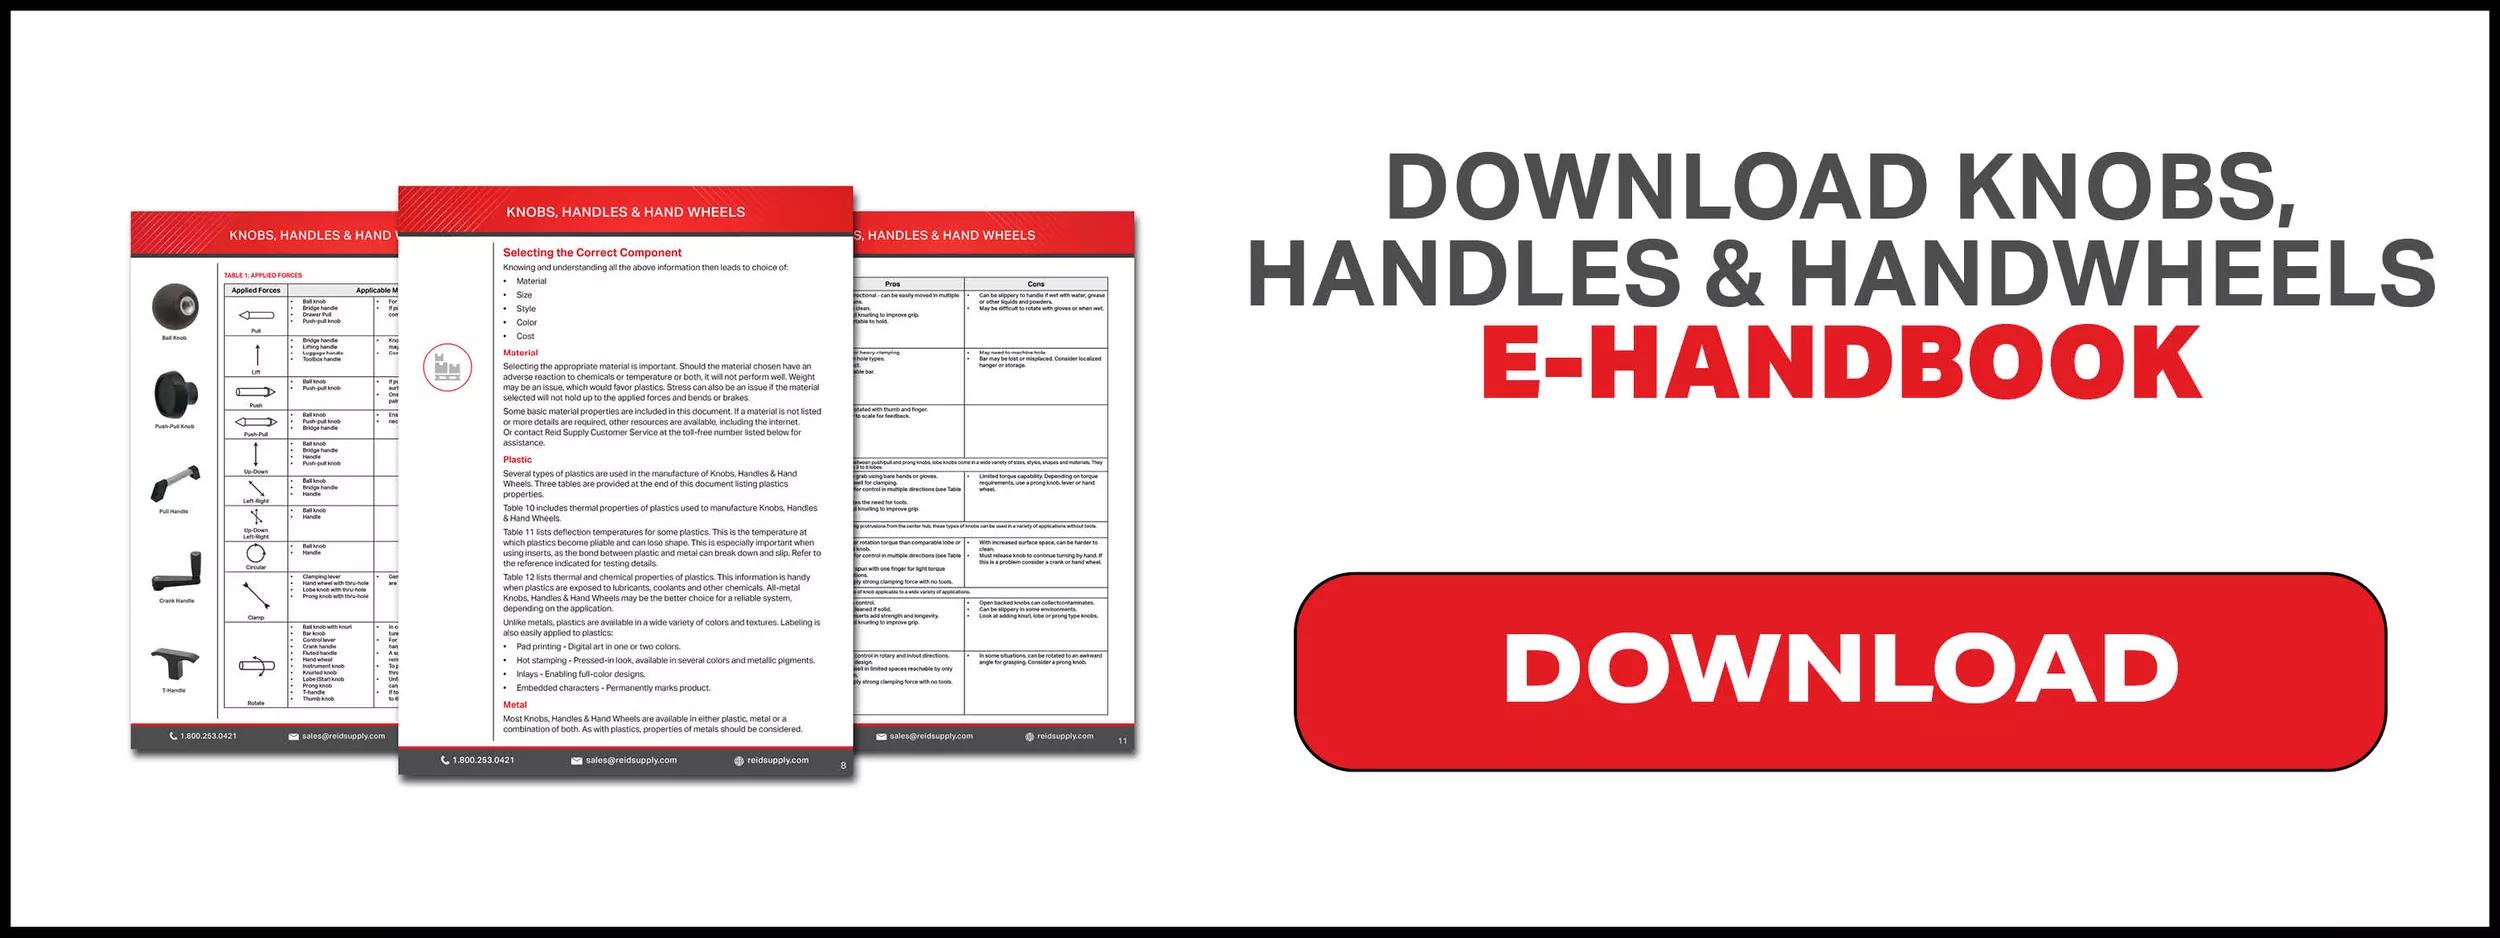 Download Knobs, Handles & Handwheels E-Handbook